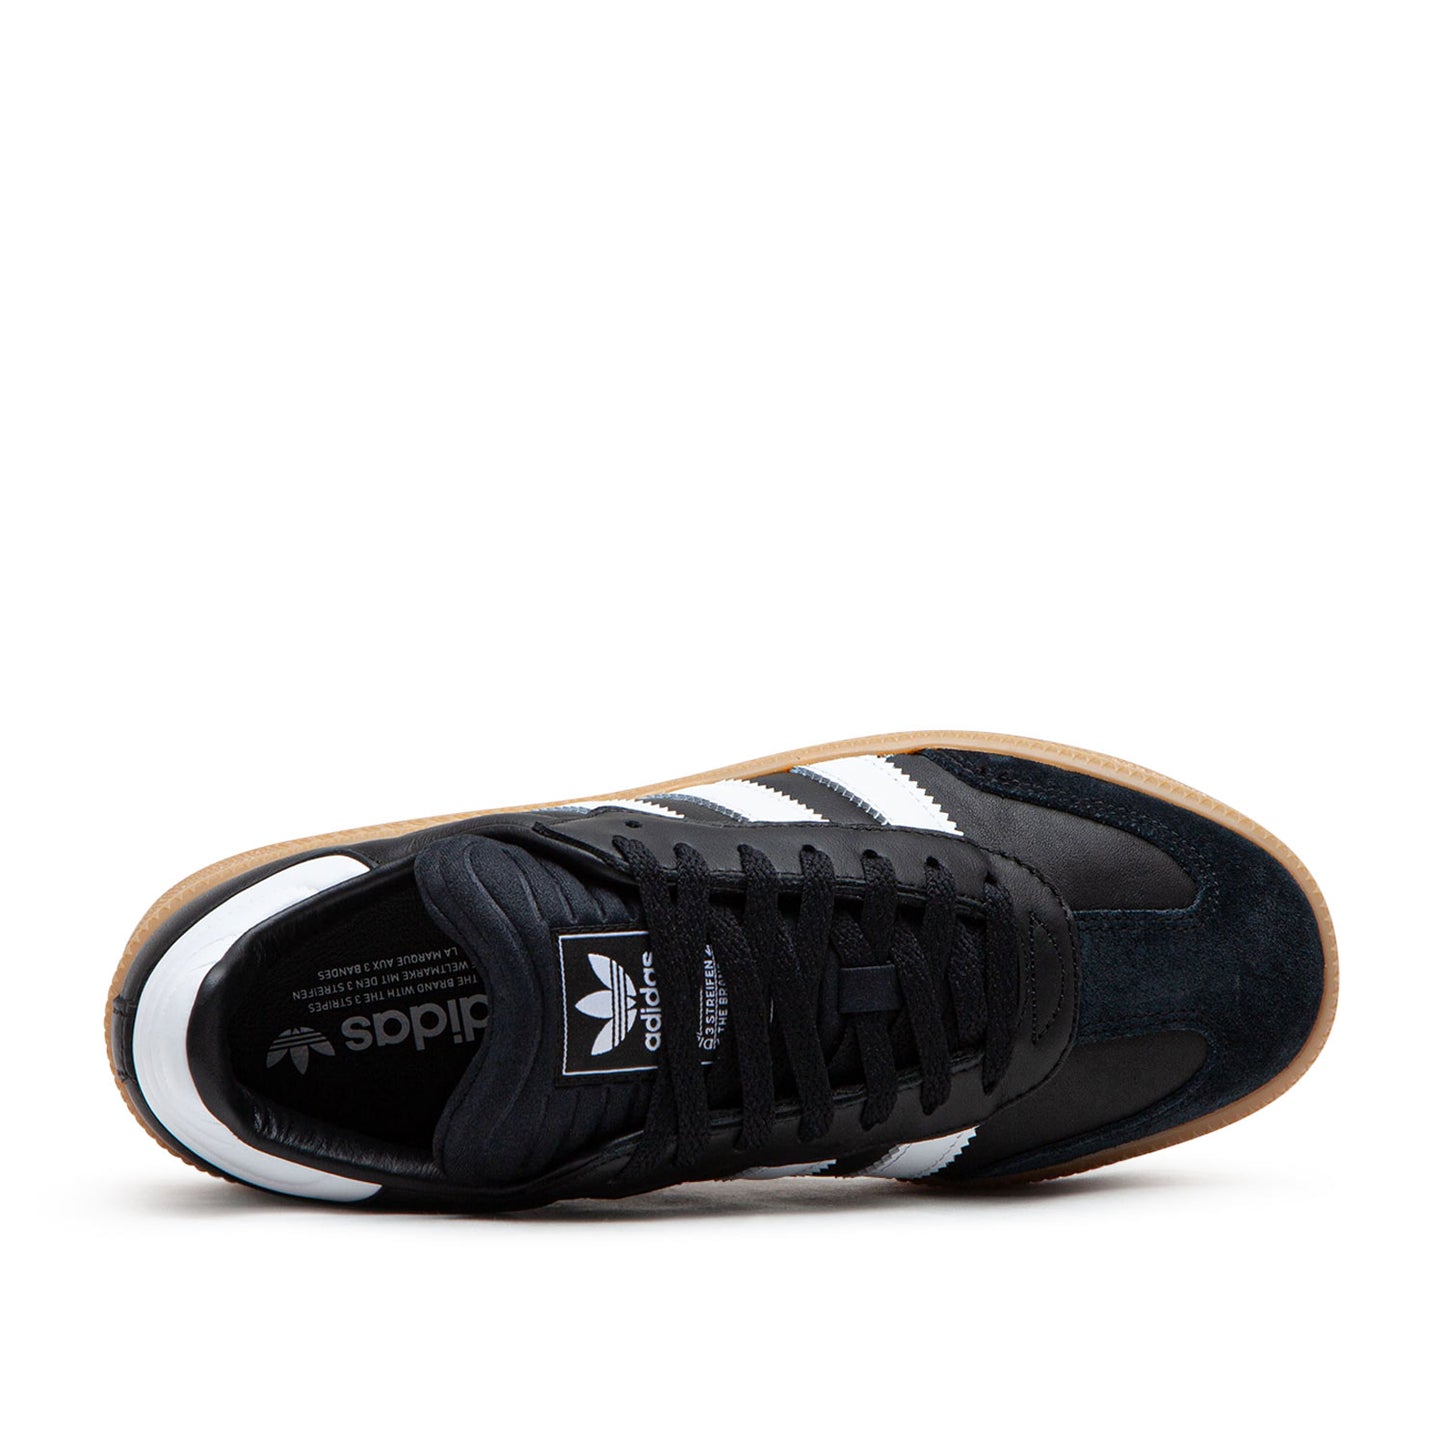 adidas Samba XLG (Schwarz / Weiß)  - Cheap Juzsports Jordan Outlet